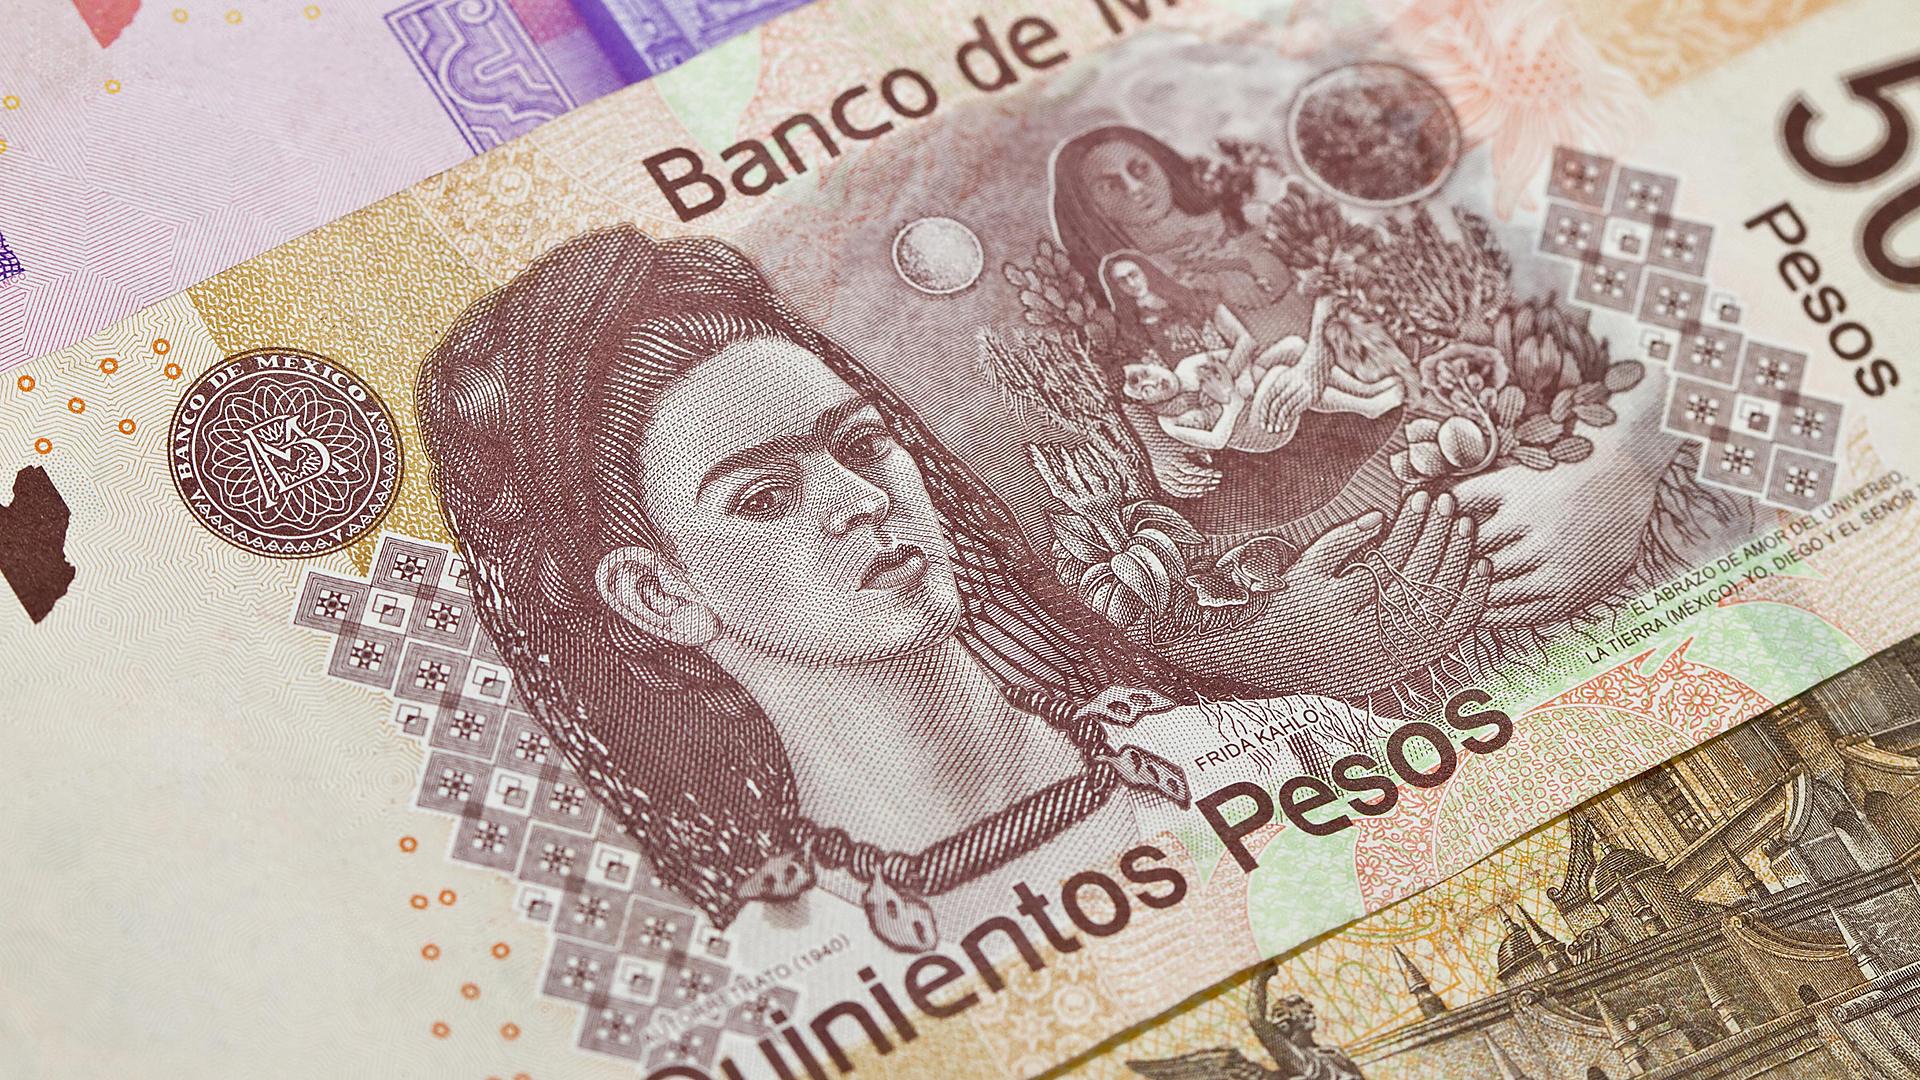 frida-kahlo-in-local-pesos